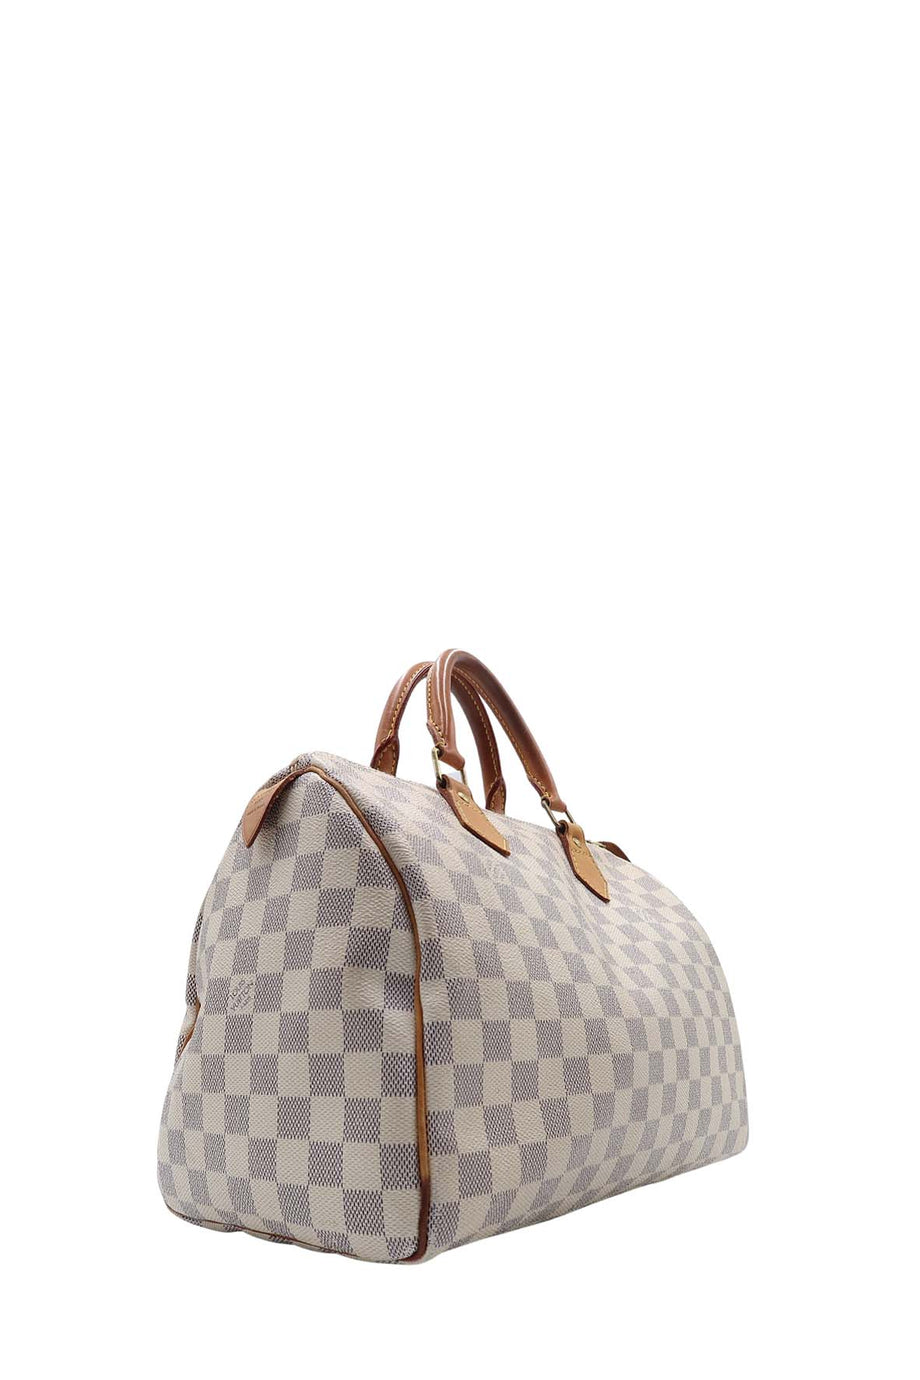 Louis Vuitton handbag, model Speedy 25 in Damier Azur co…